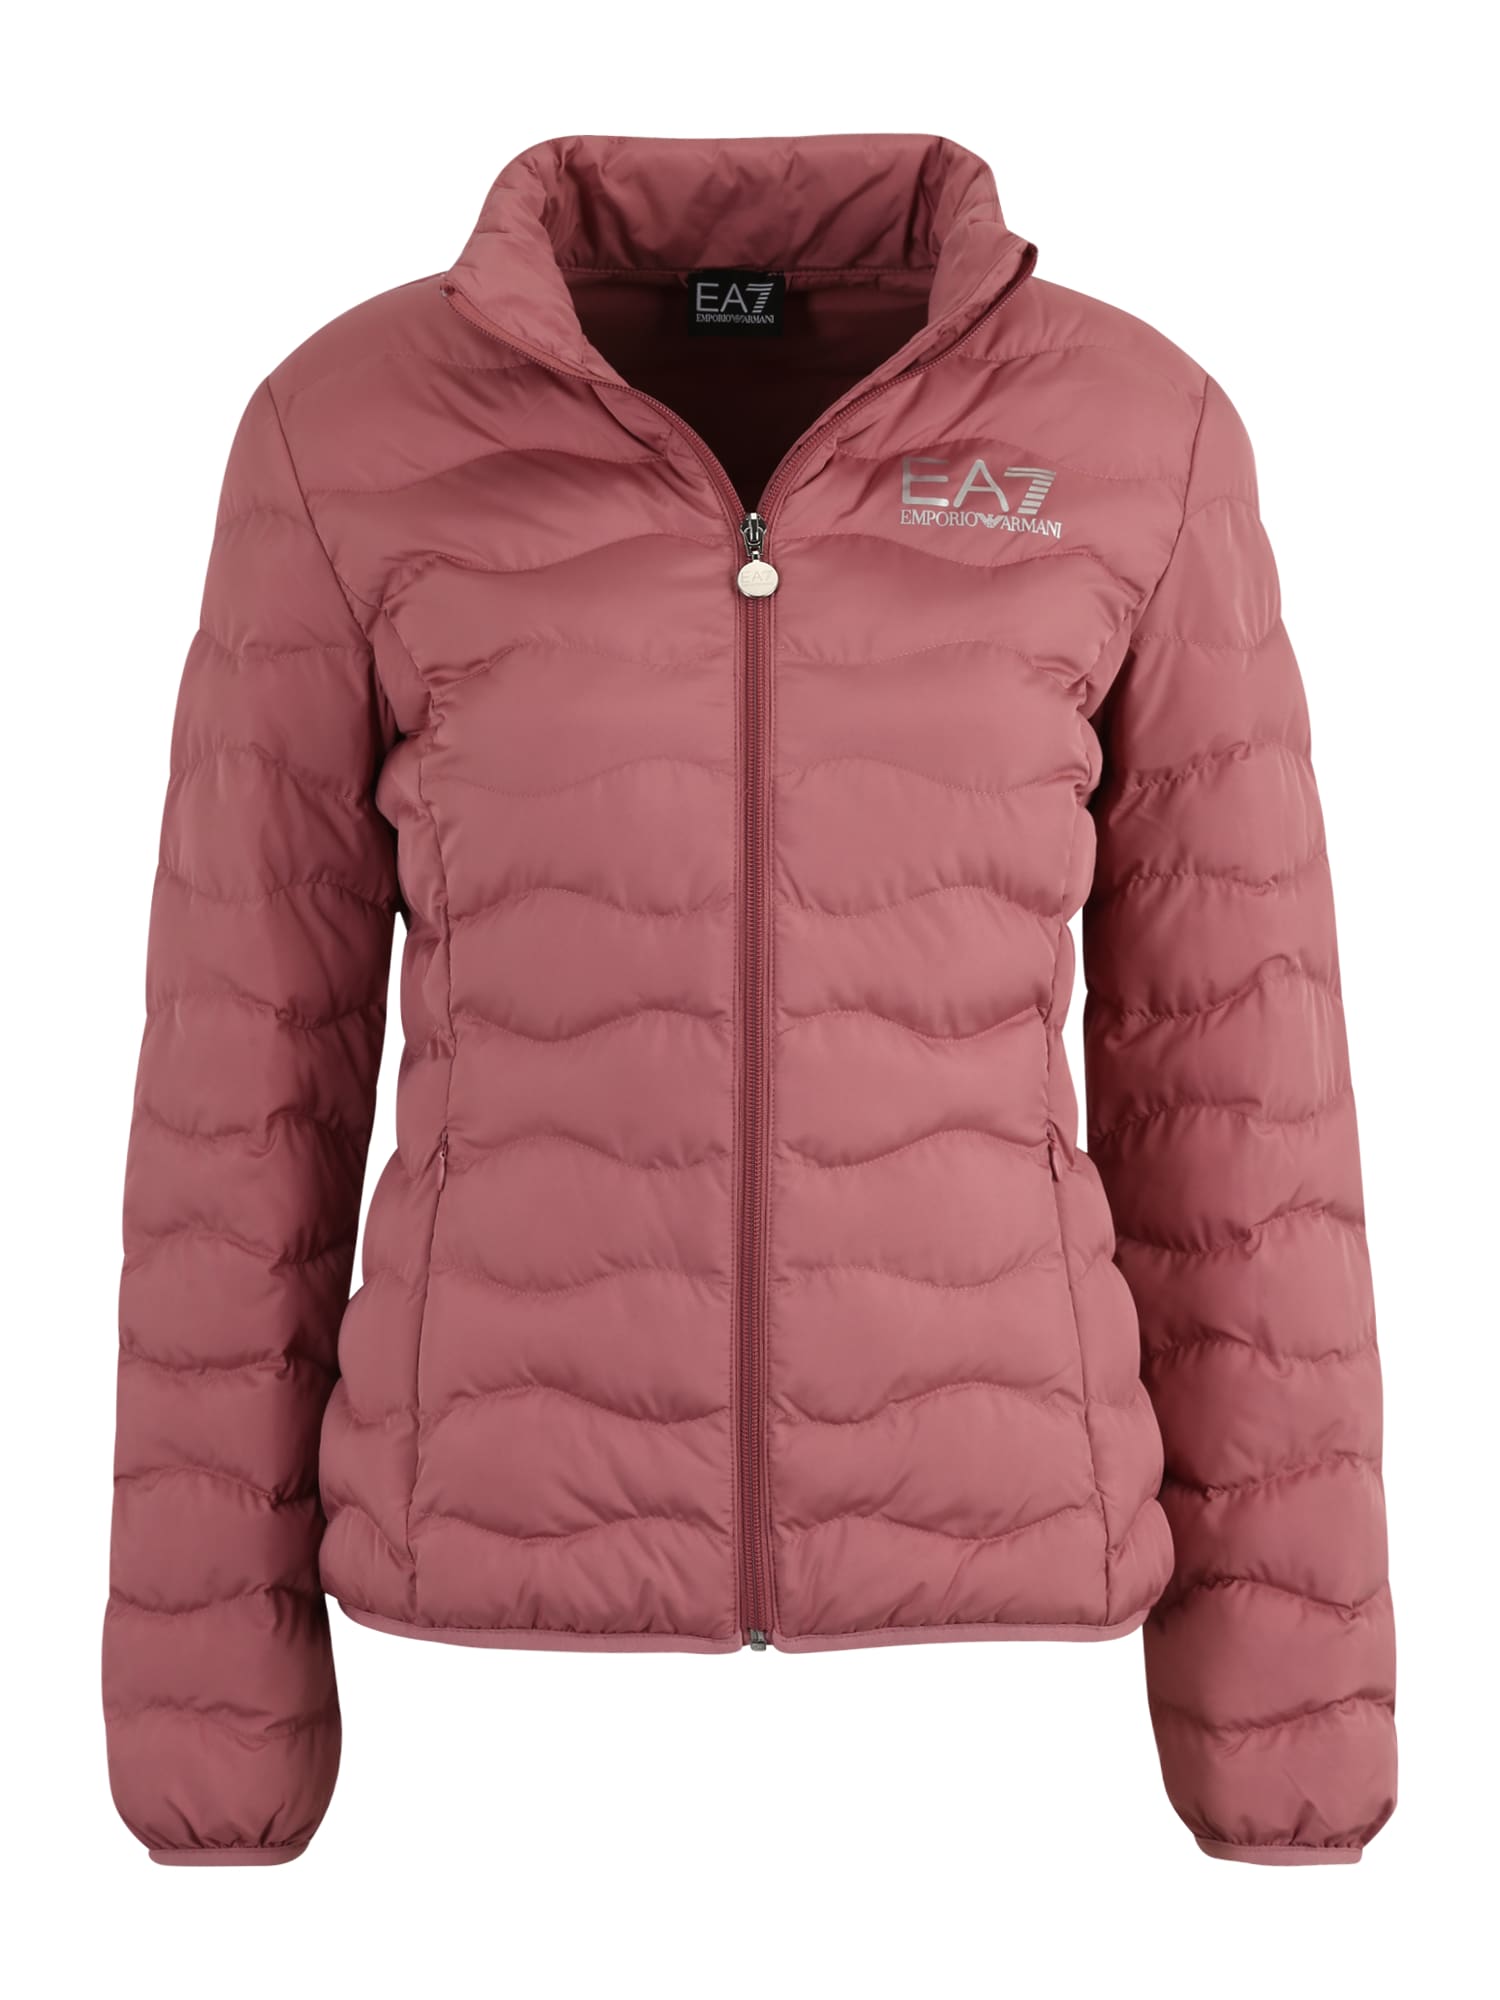 EA7 Emporio Armani Prehodna jakna  roza / srebrna